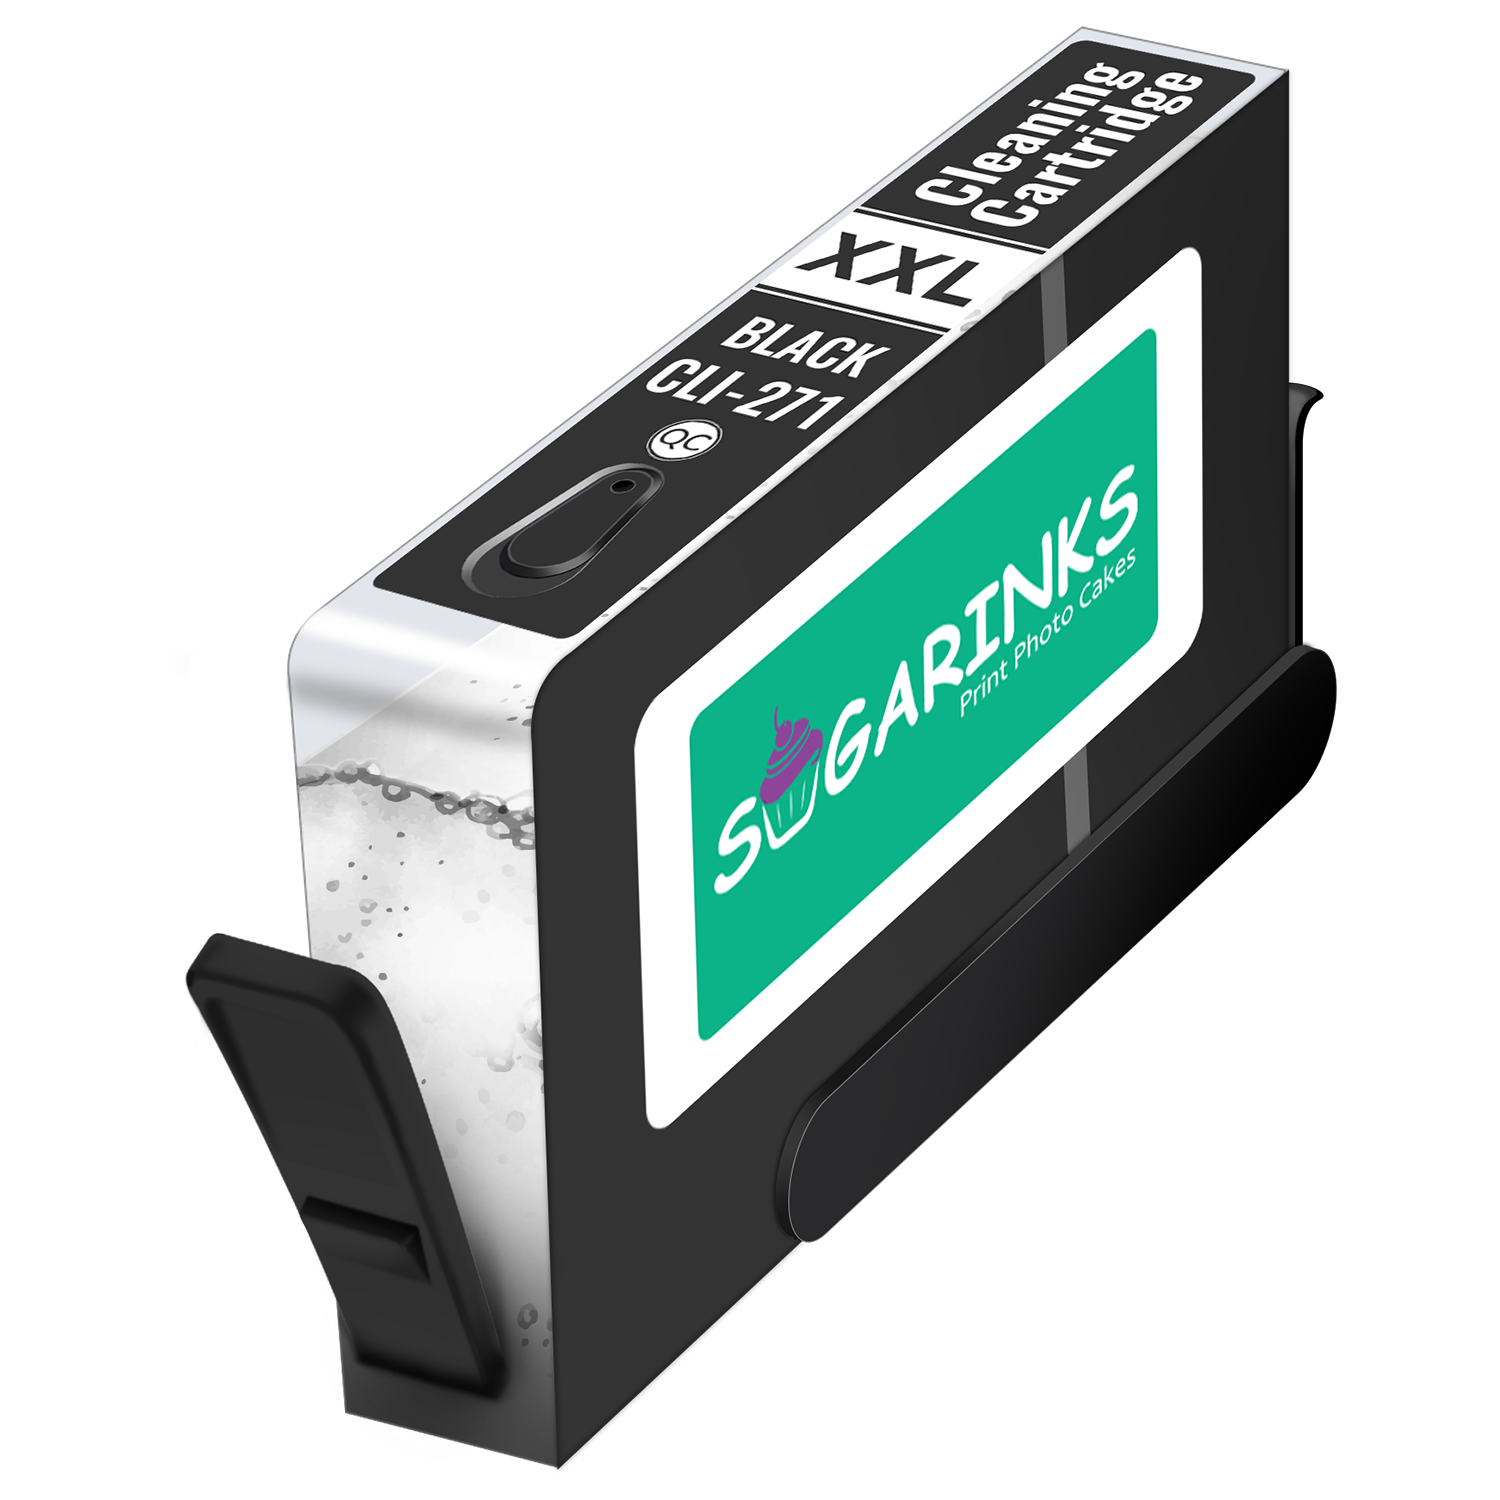 Sugarinks Edible Cleaning Cartridge CLI-271XL for Canon Edible Printer – Black 